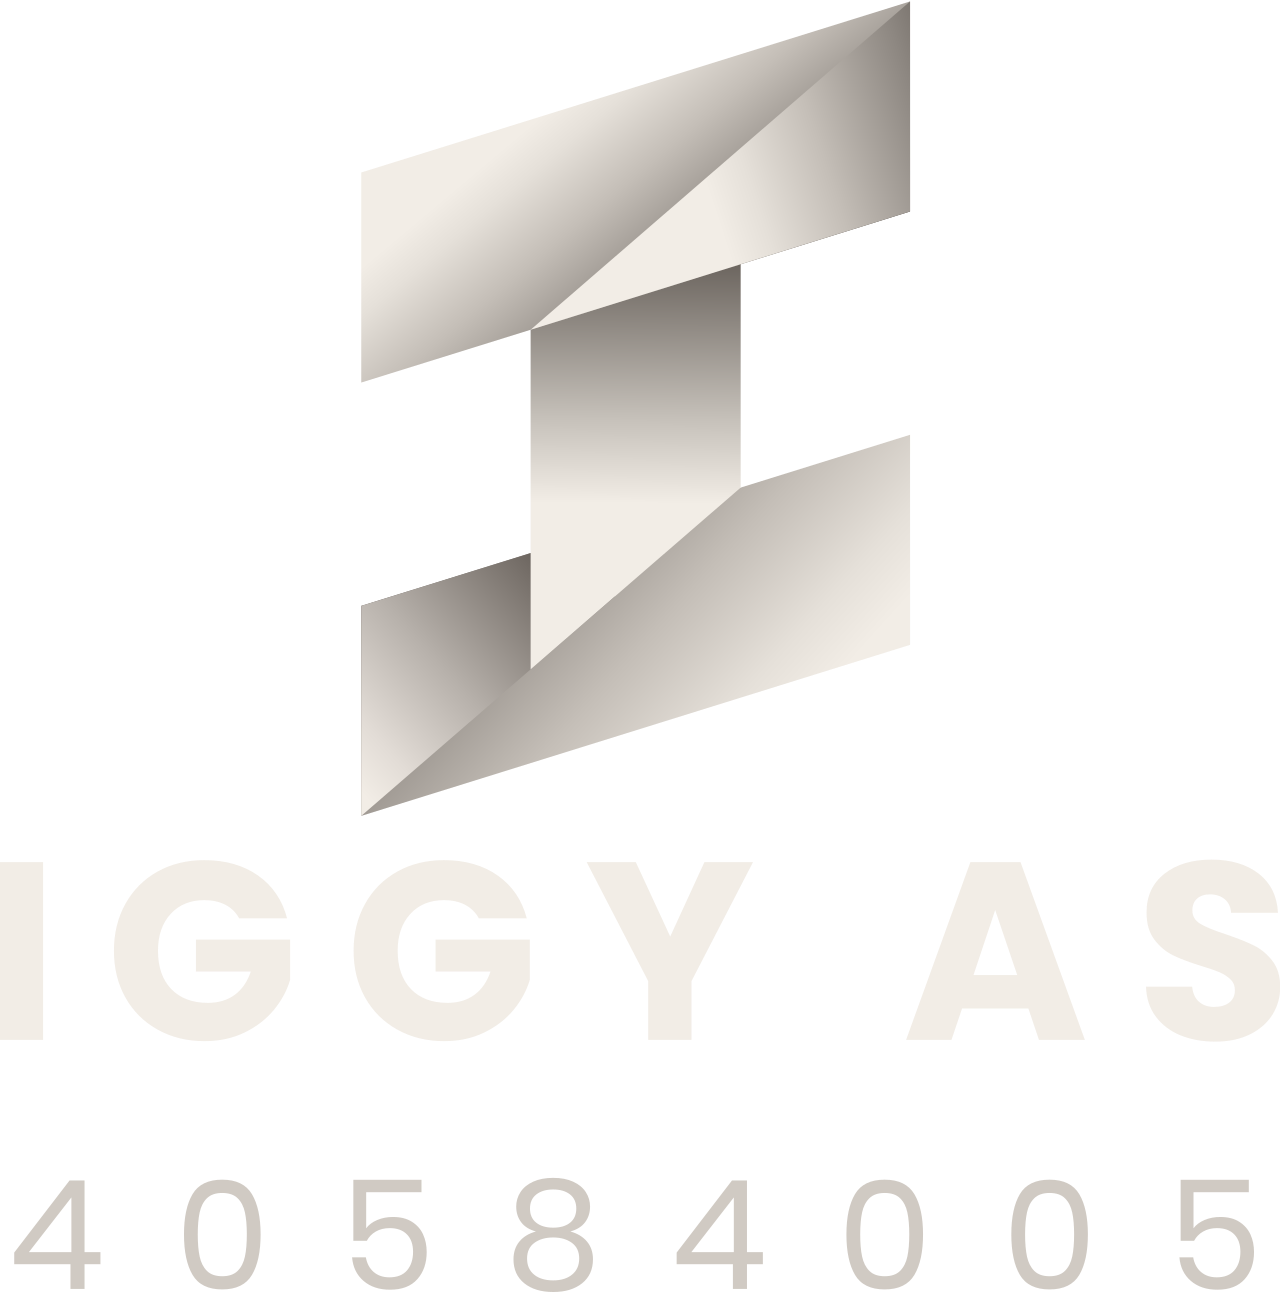 IGGY AS's logo